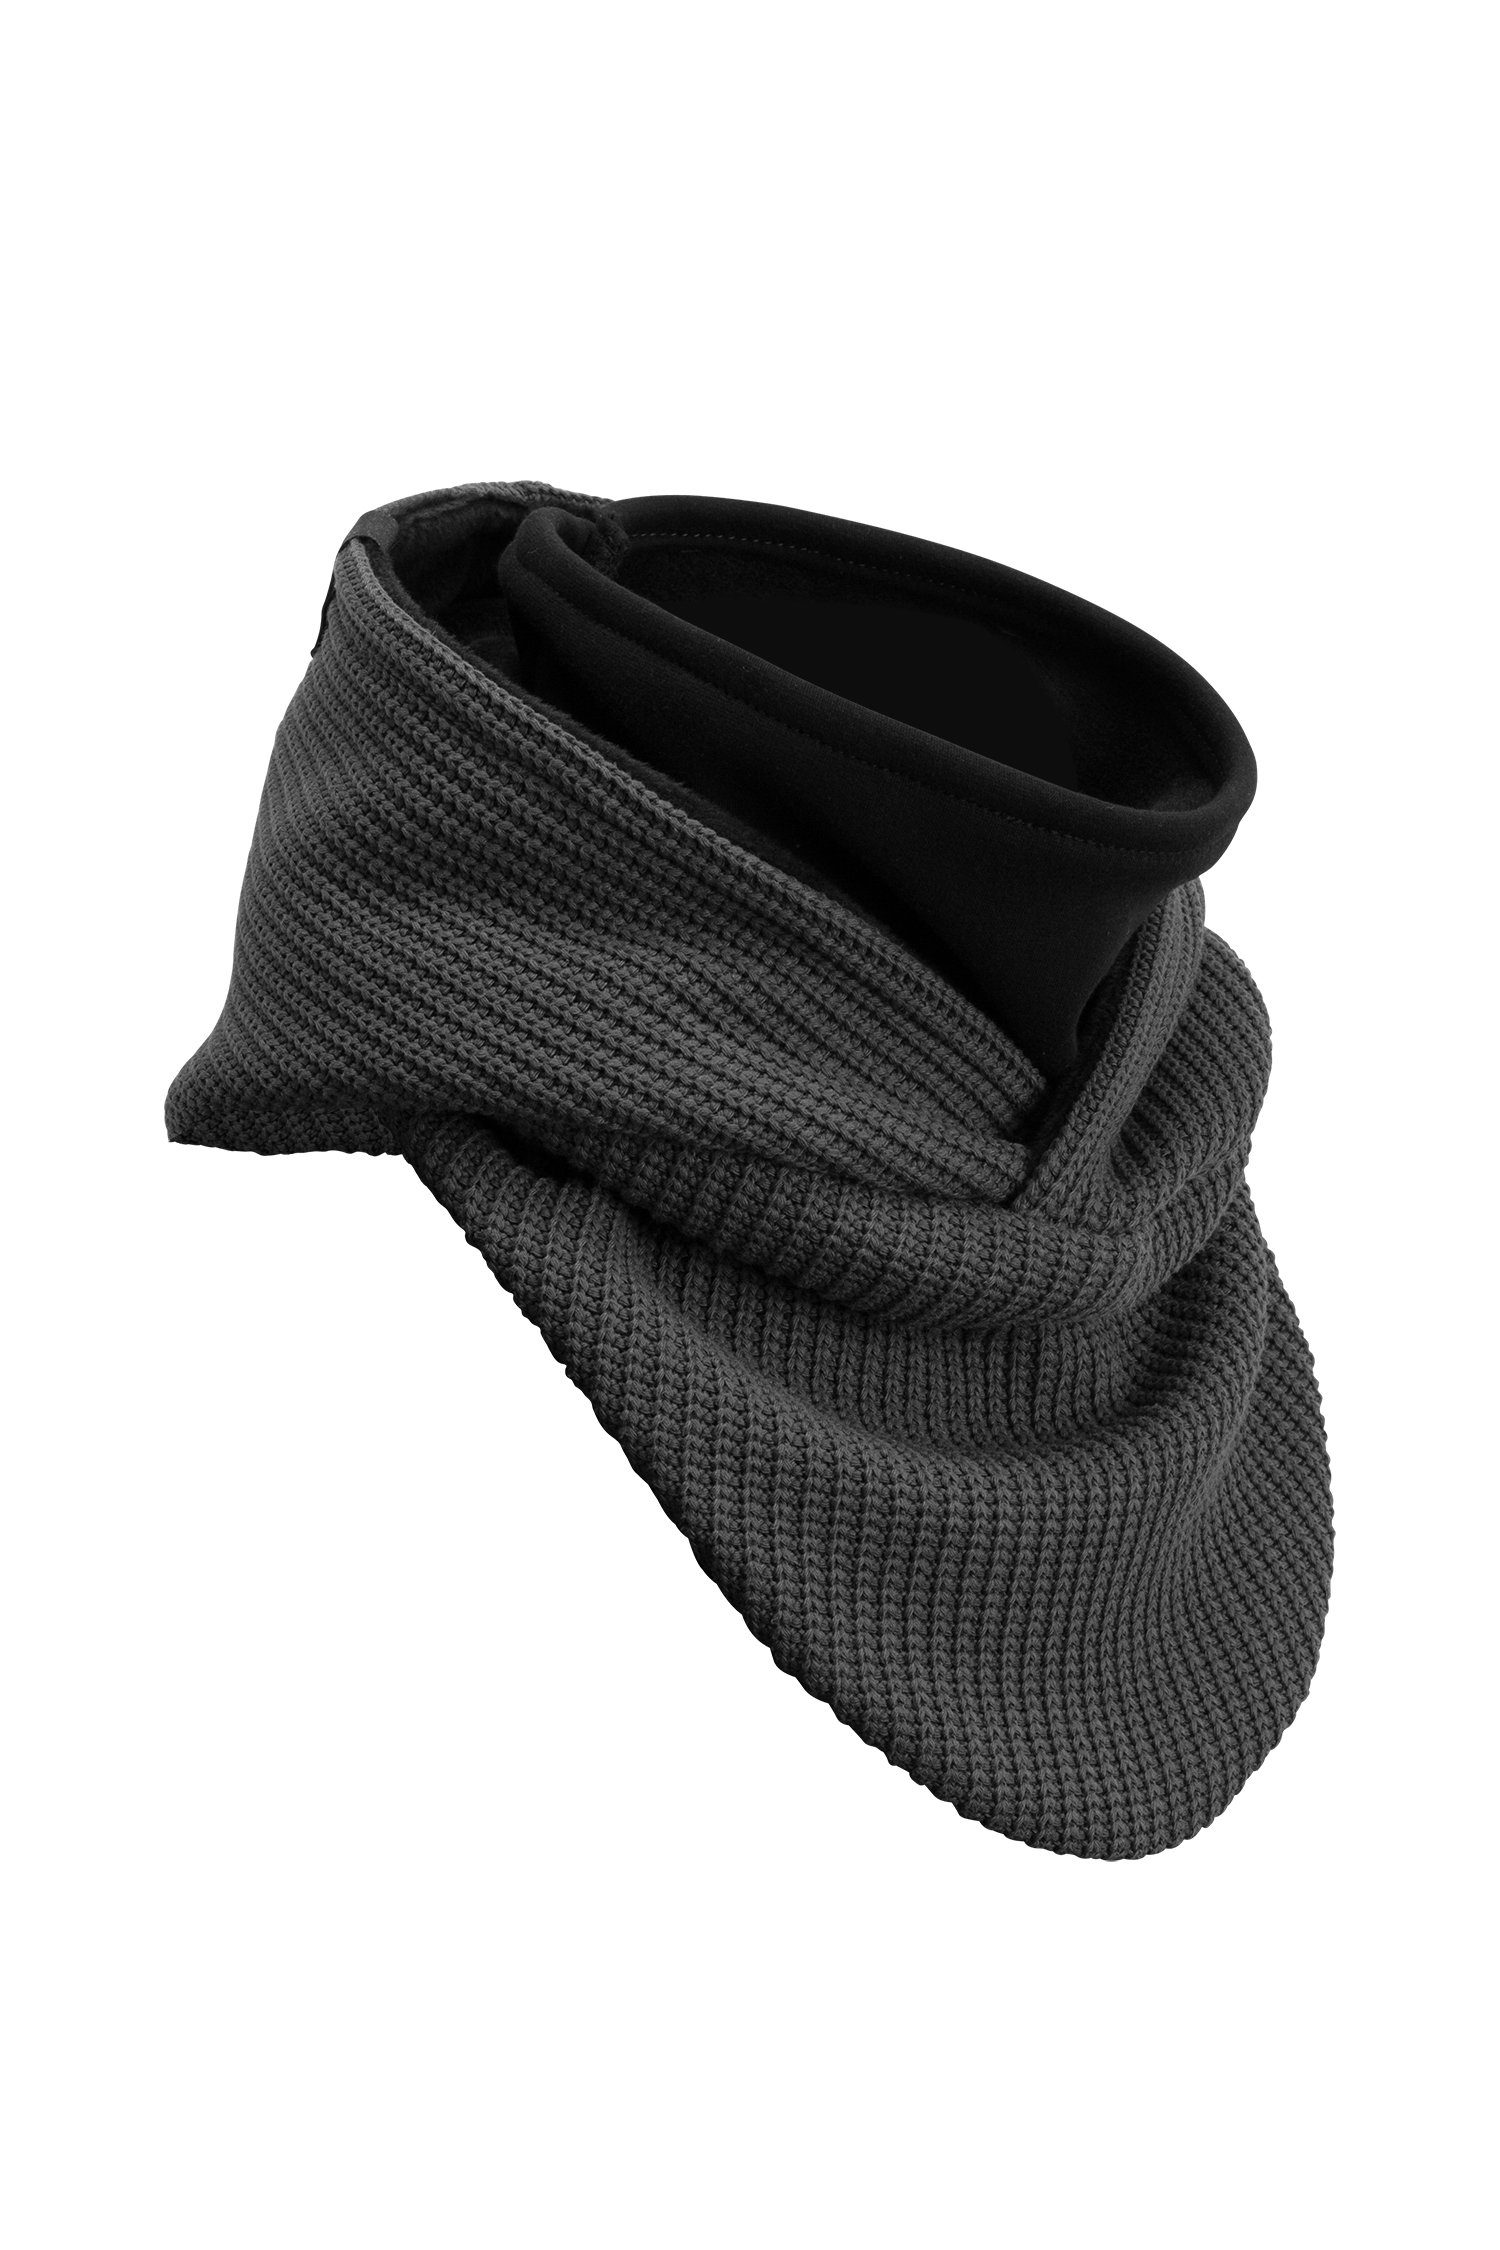 Knit Hooded Schal, mit Kapuzenschal, Storm Grey Loop Modeschal Strickschal, integriertem Manufaktur13 - Windbreaker